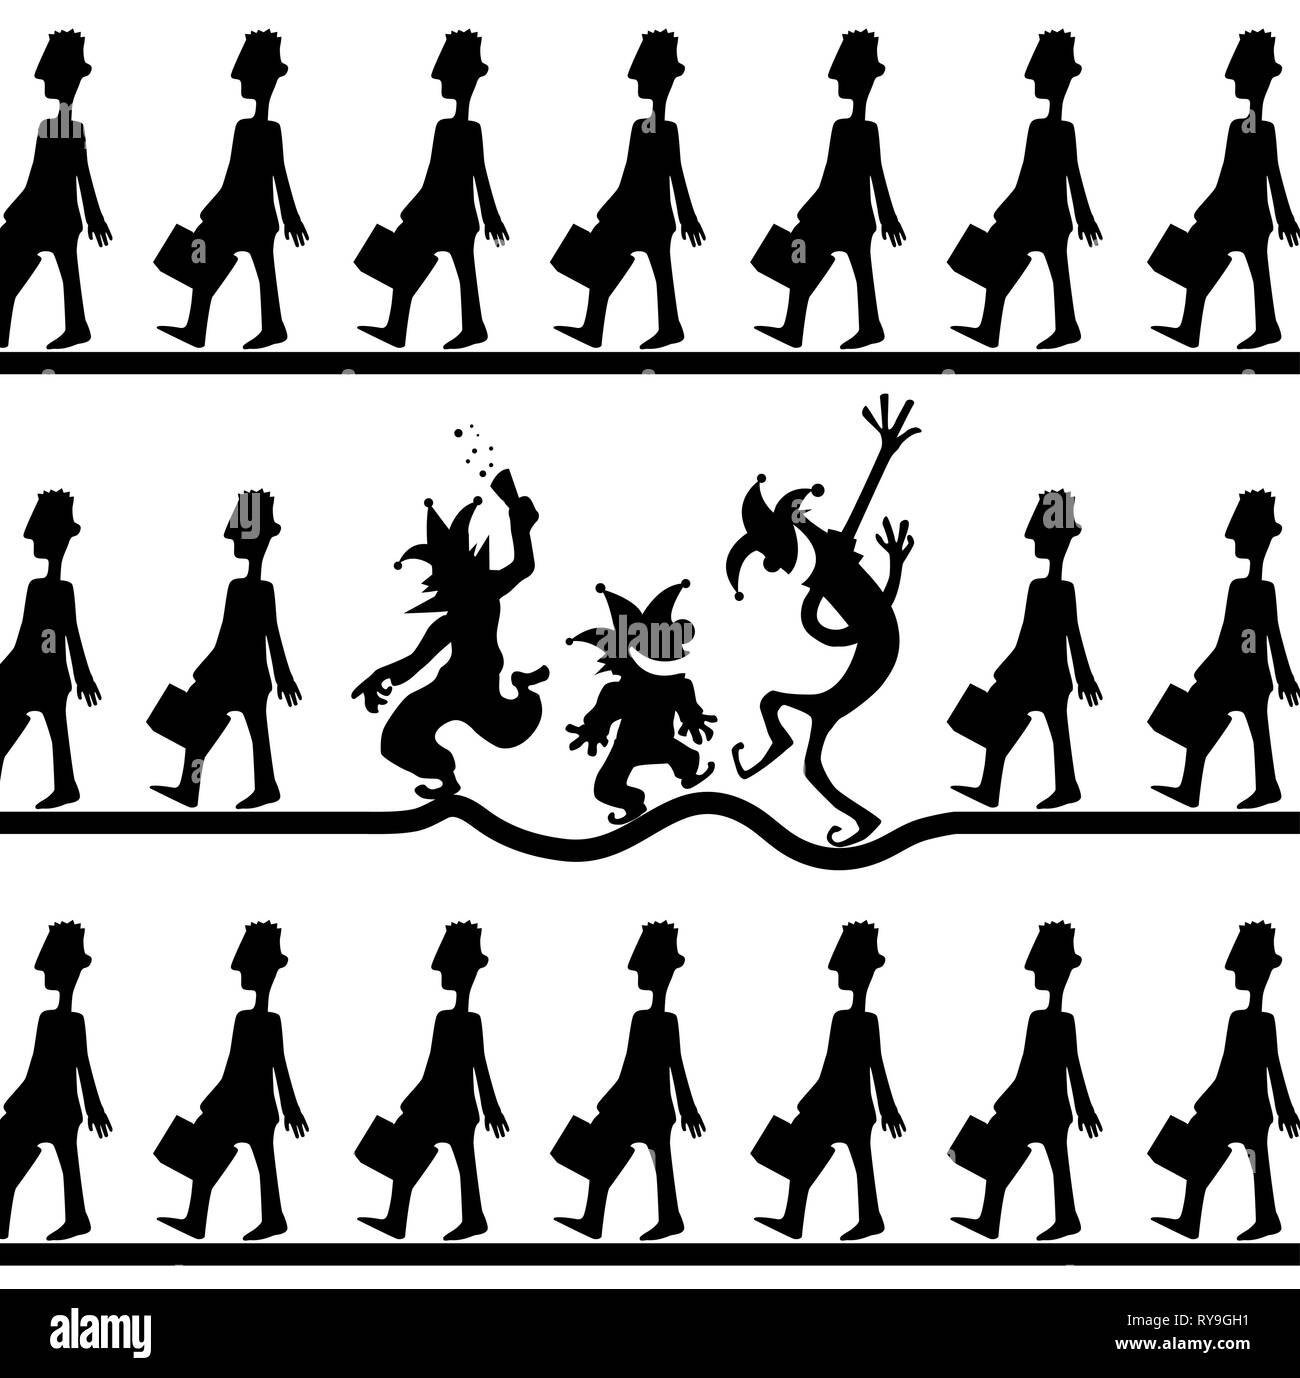 Conformity fun cartoon clown black silhouettes, vector illustration, horizontal, over white Stock Vector